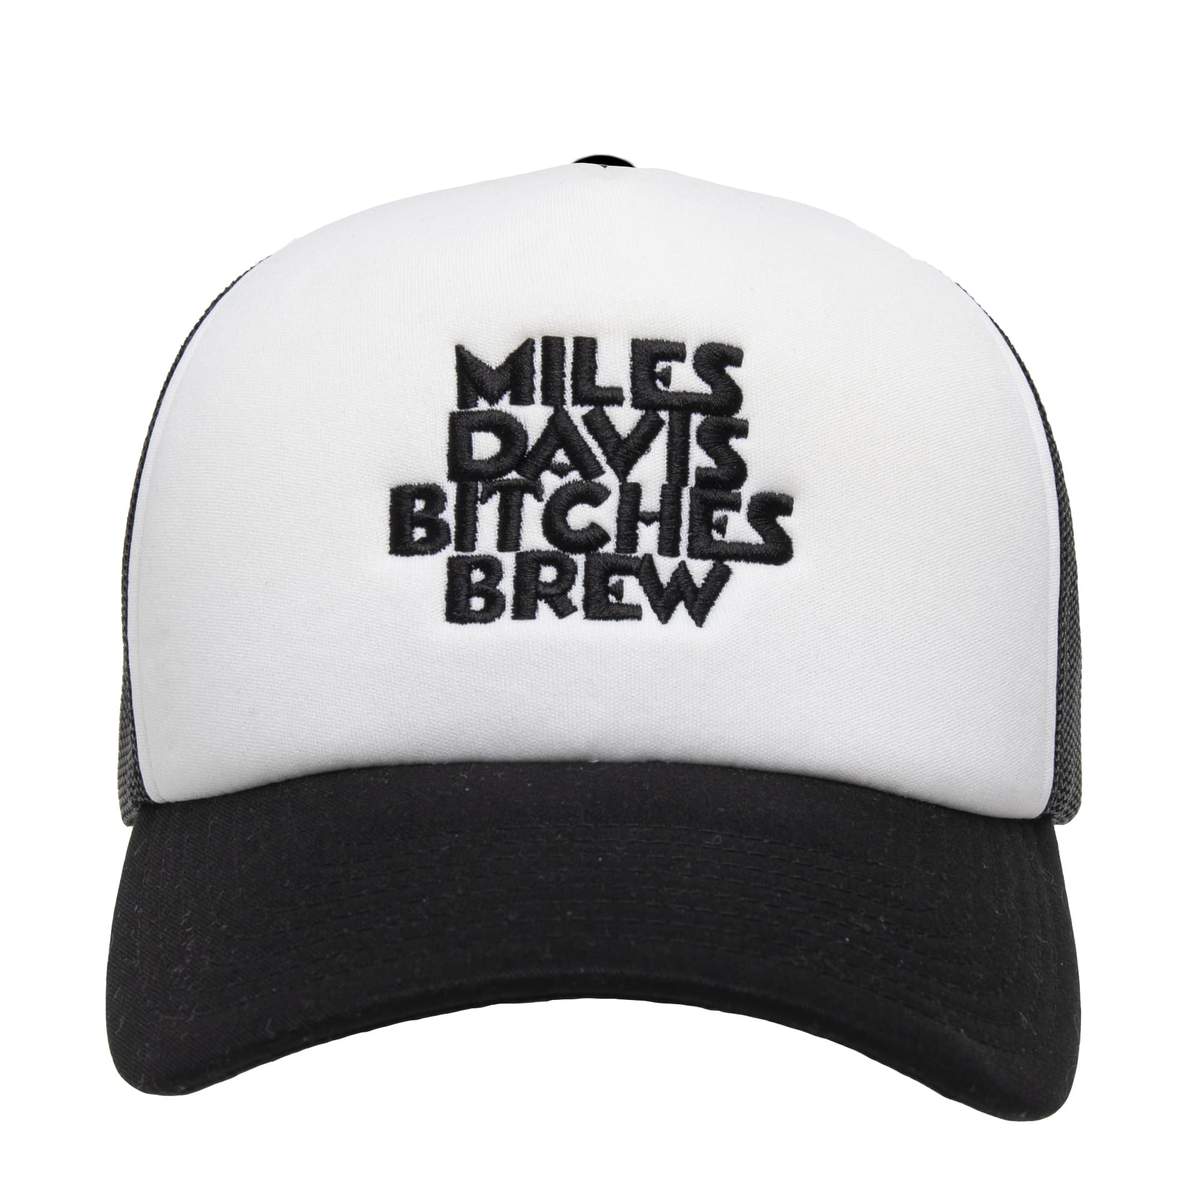 HUF x Miles Davis - Funky Tonk Trucker Cap, Black